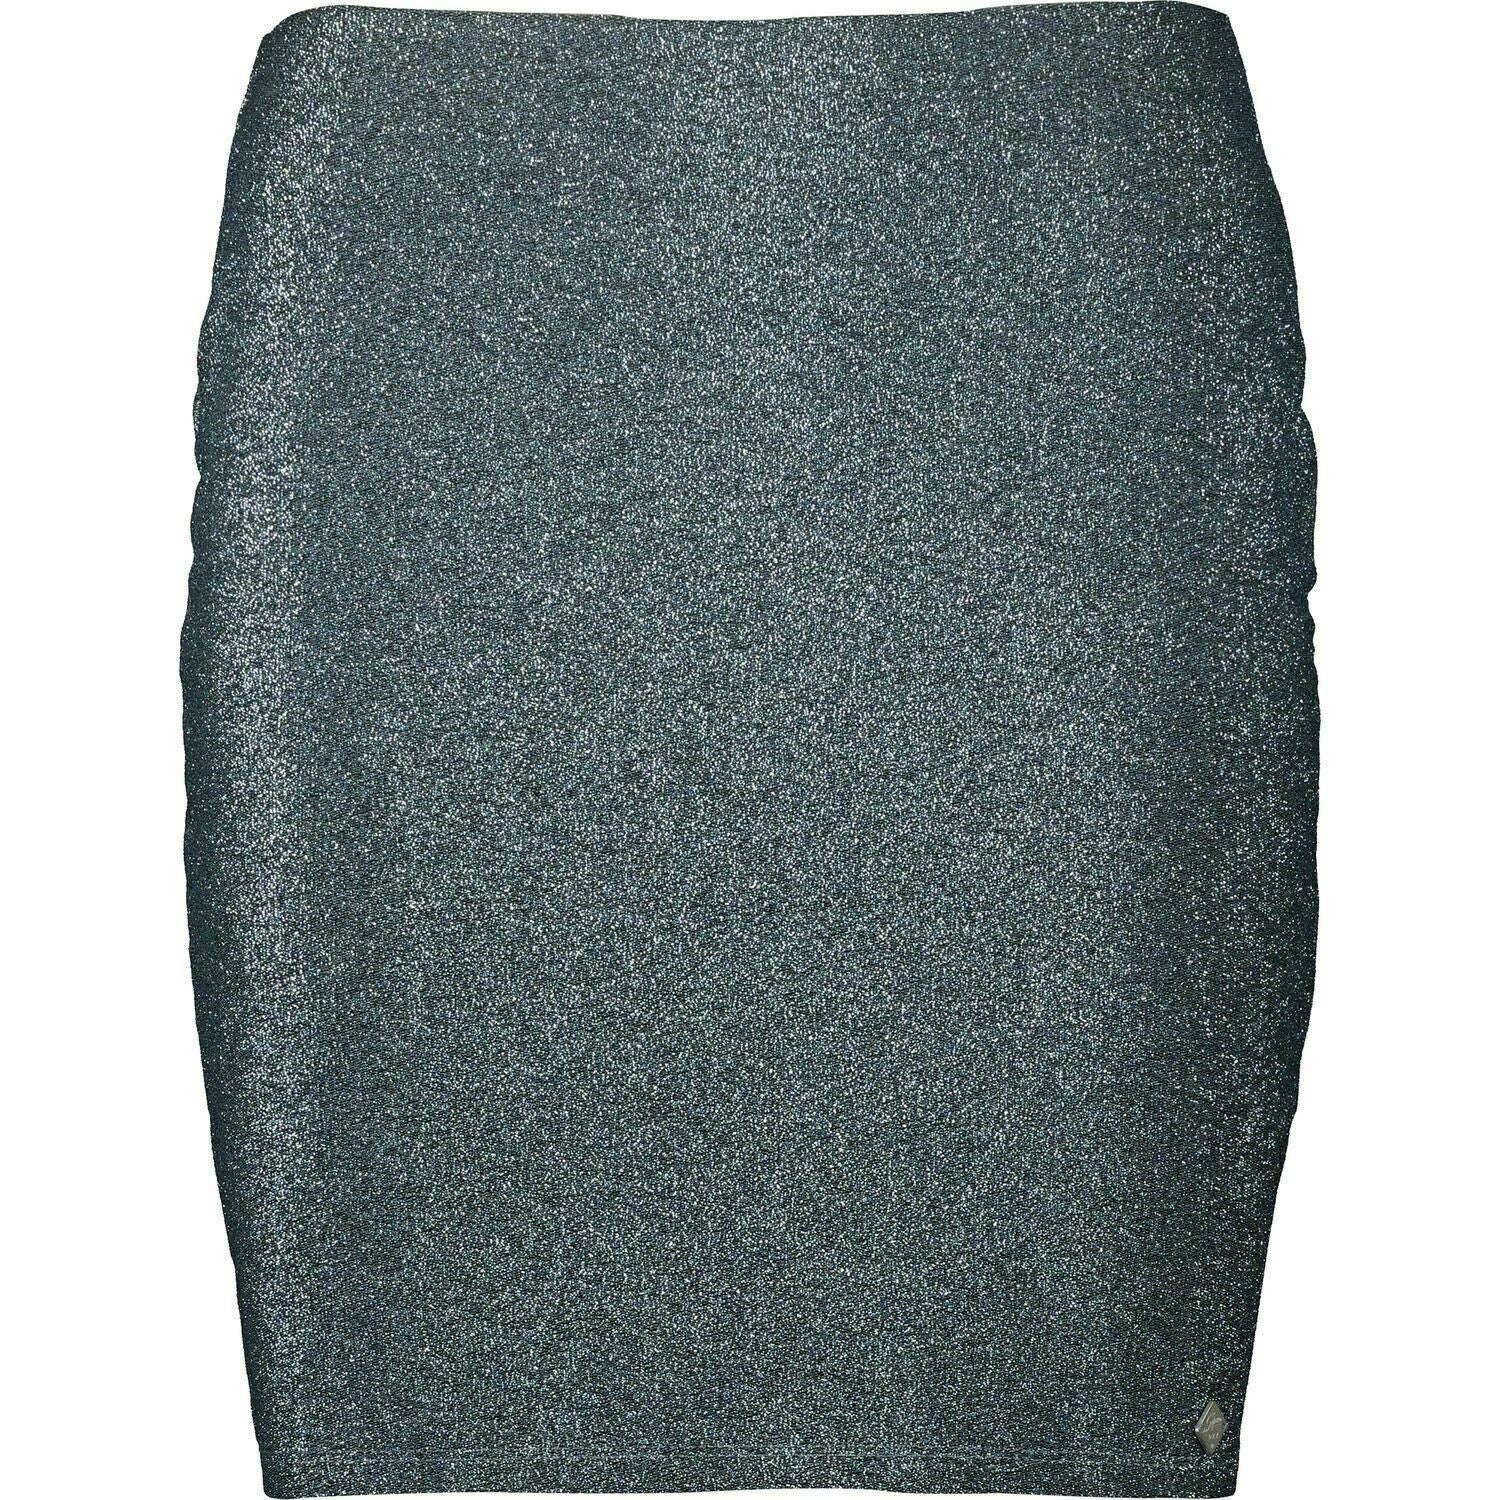 SUPERDRY Women's MIA Blue Sparkle Shimmer Skirt, size XS / UK 8